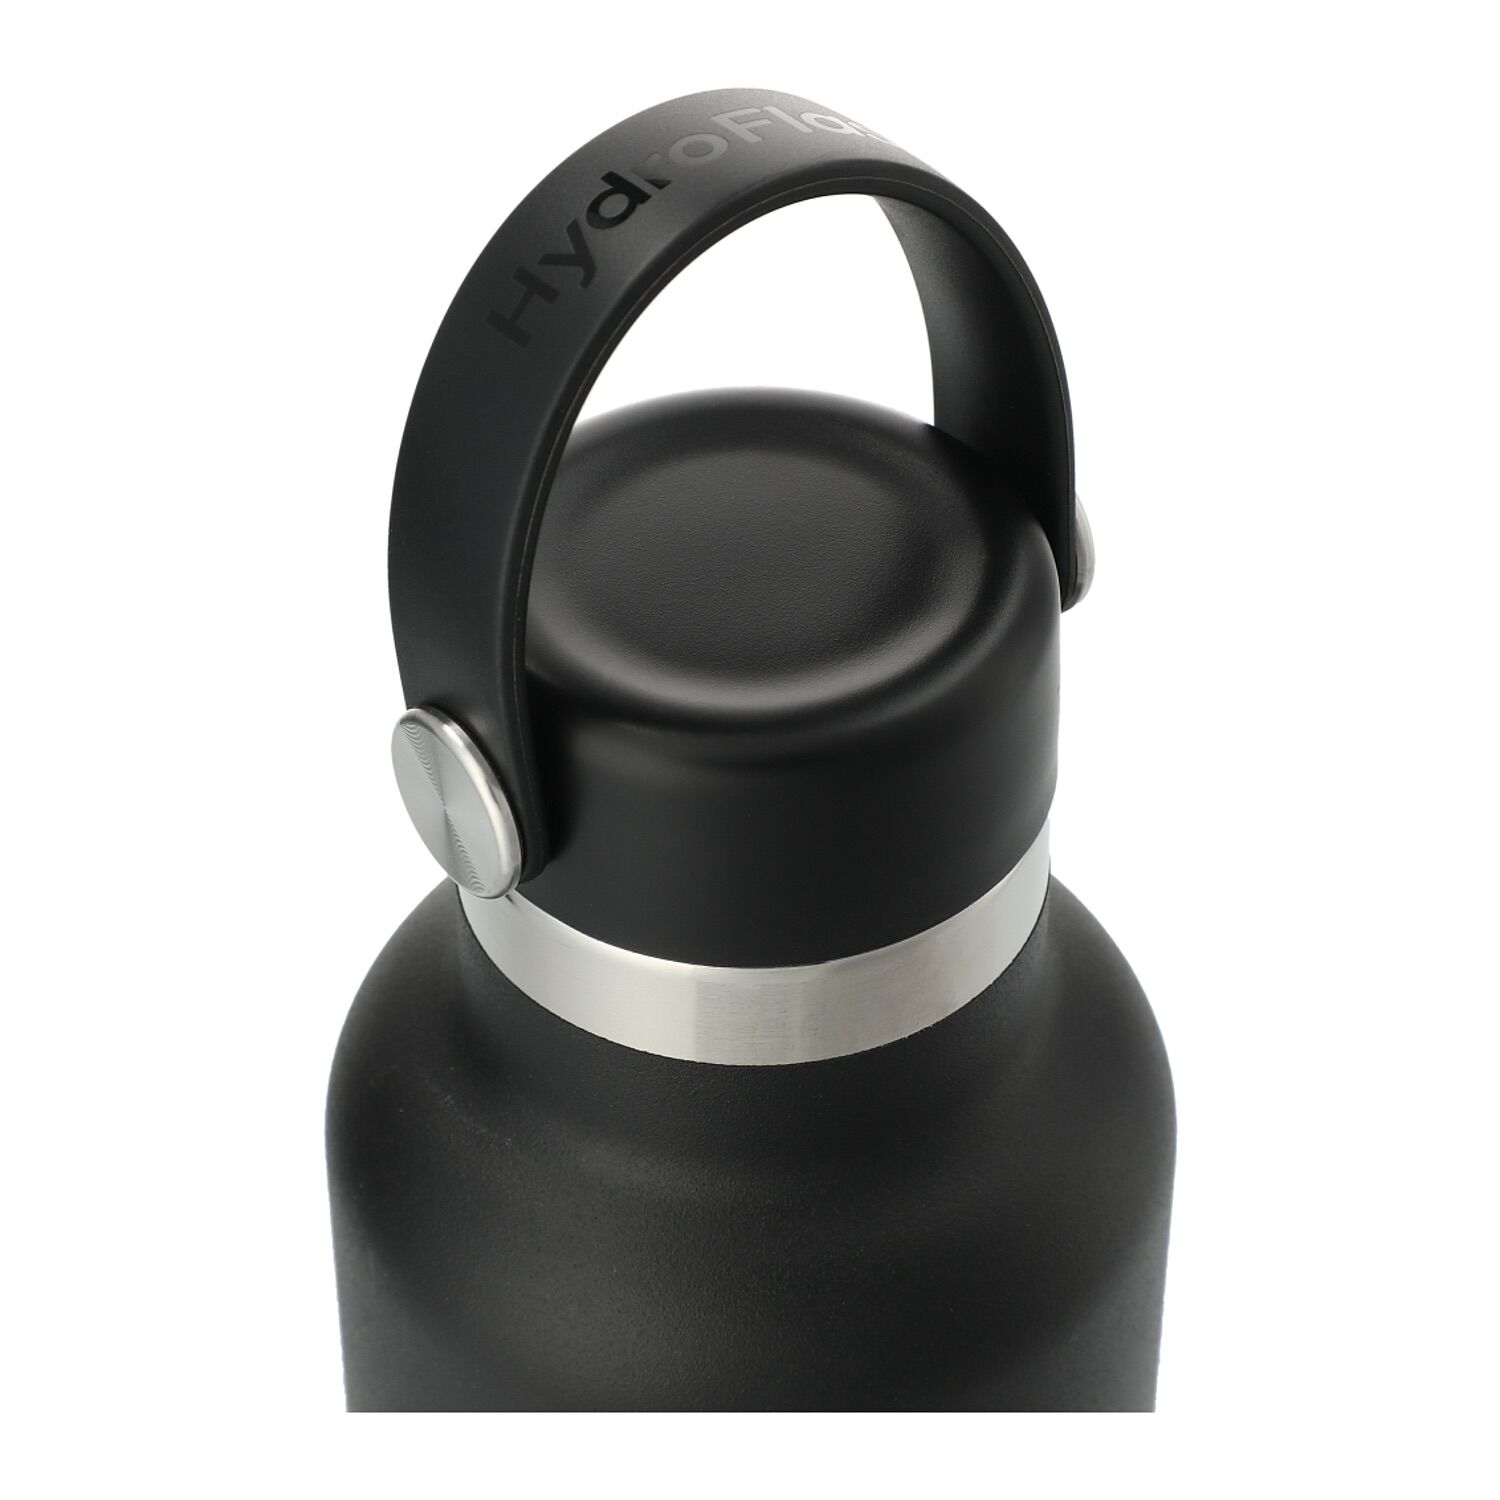 https://www.drivemerch.com/wp-content/uploads/2022/08/branded-hydro-flask-standard-mouth-with-flex-cap-21-oz-black-lid.jpg